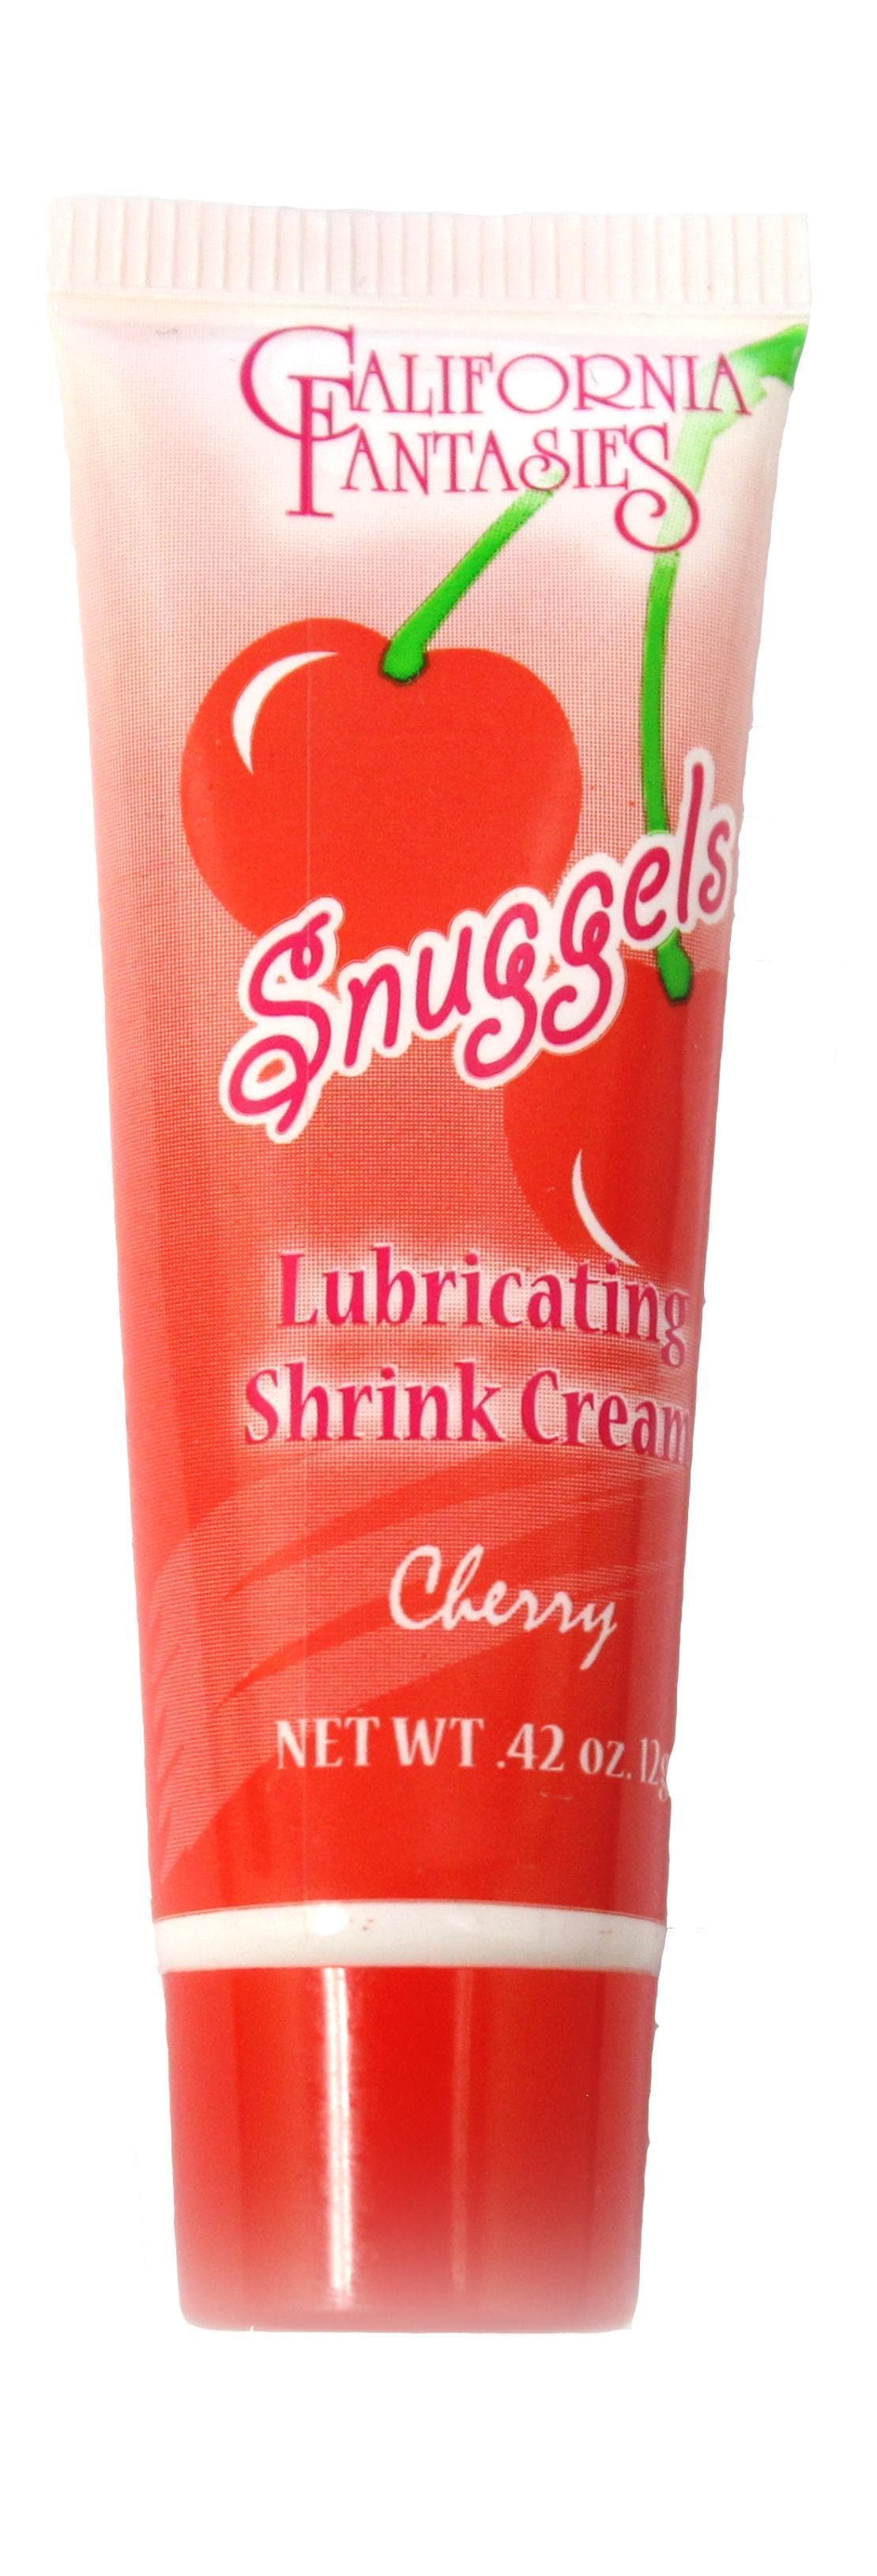 snuggels lubricating shrink cream cherry 0 42 oz tube each